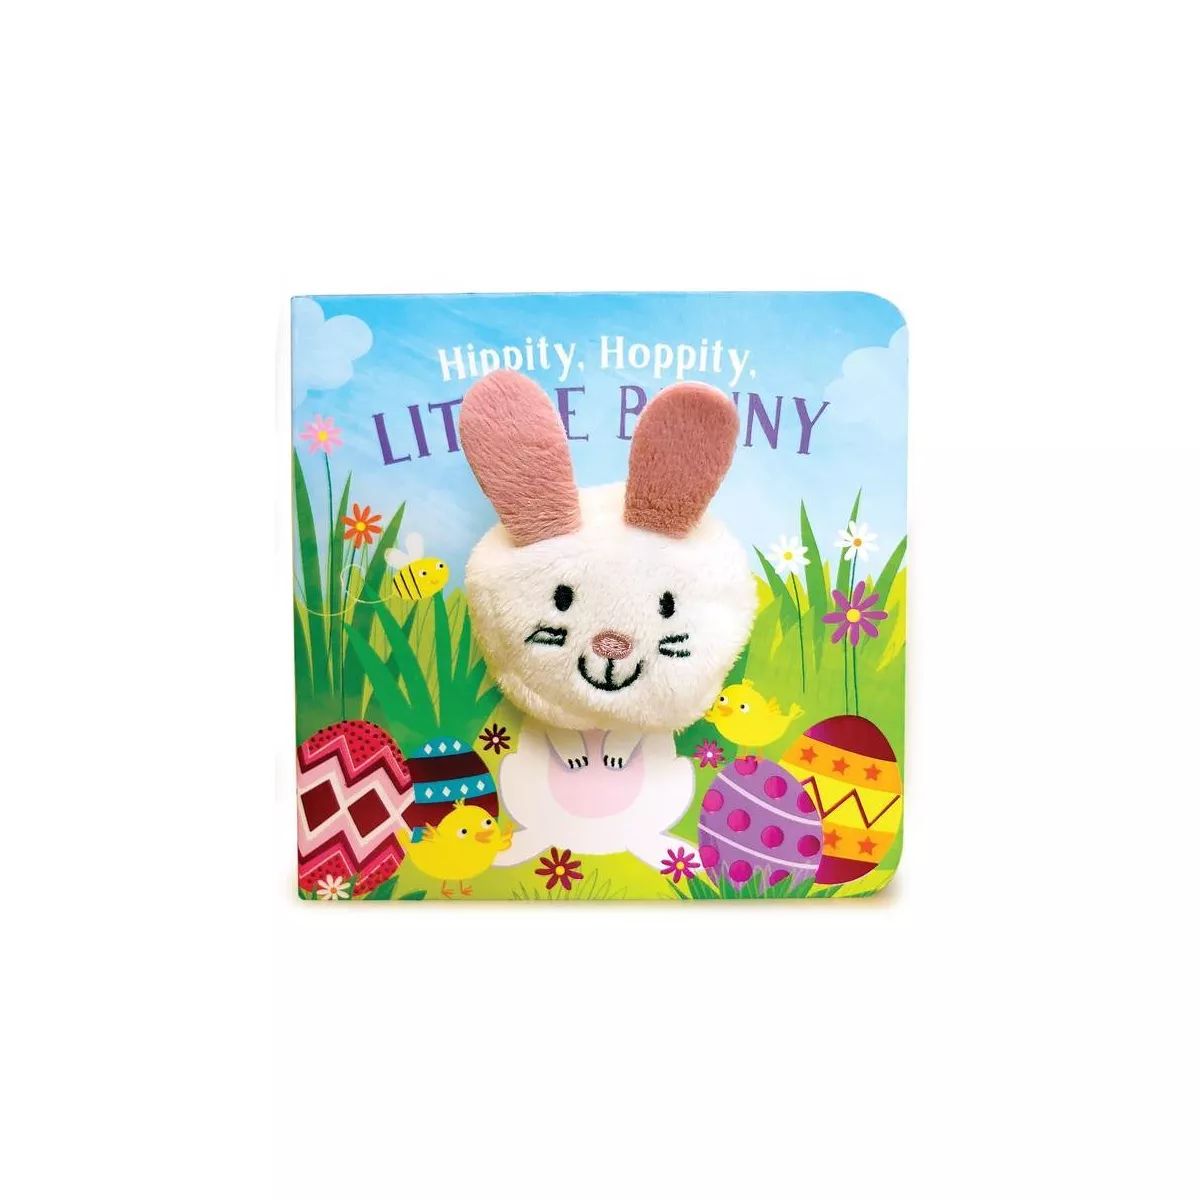 Hippity, Hoppity, Little Bunny Finger Puppet Book - by Ginger Swift (Hardcover) | Target